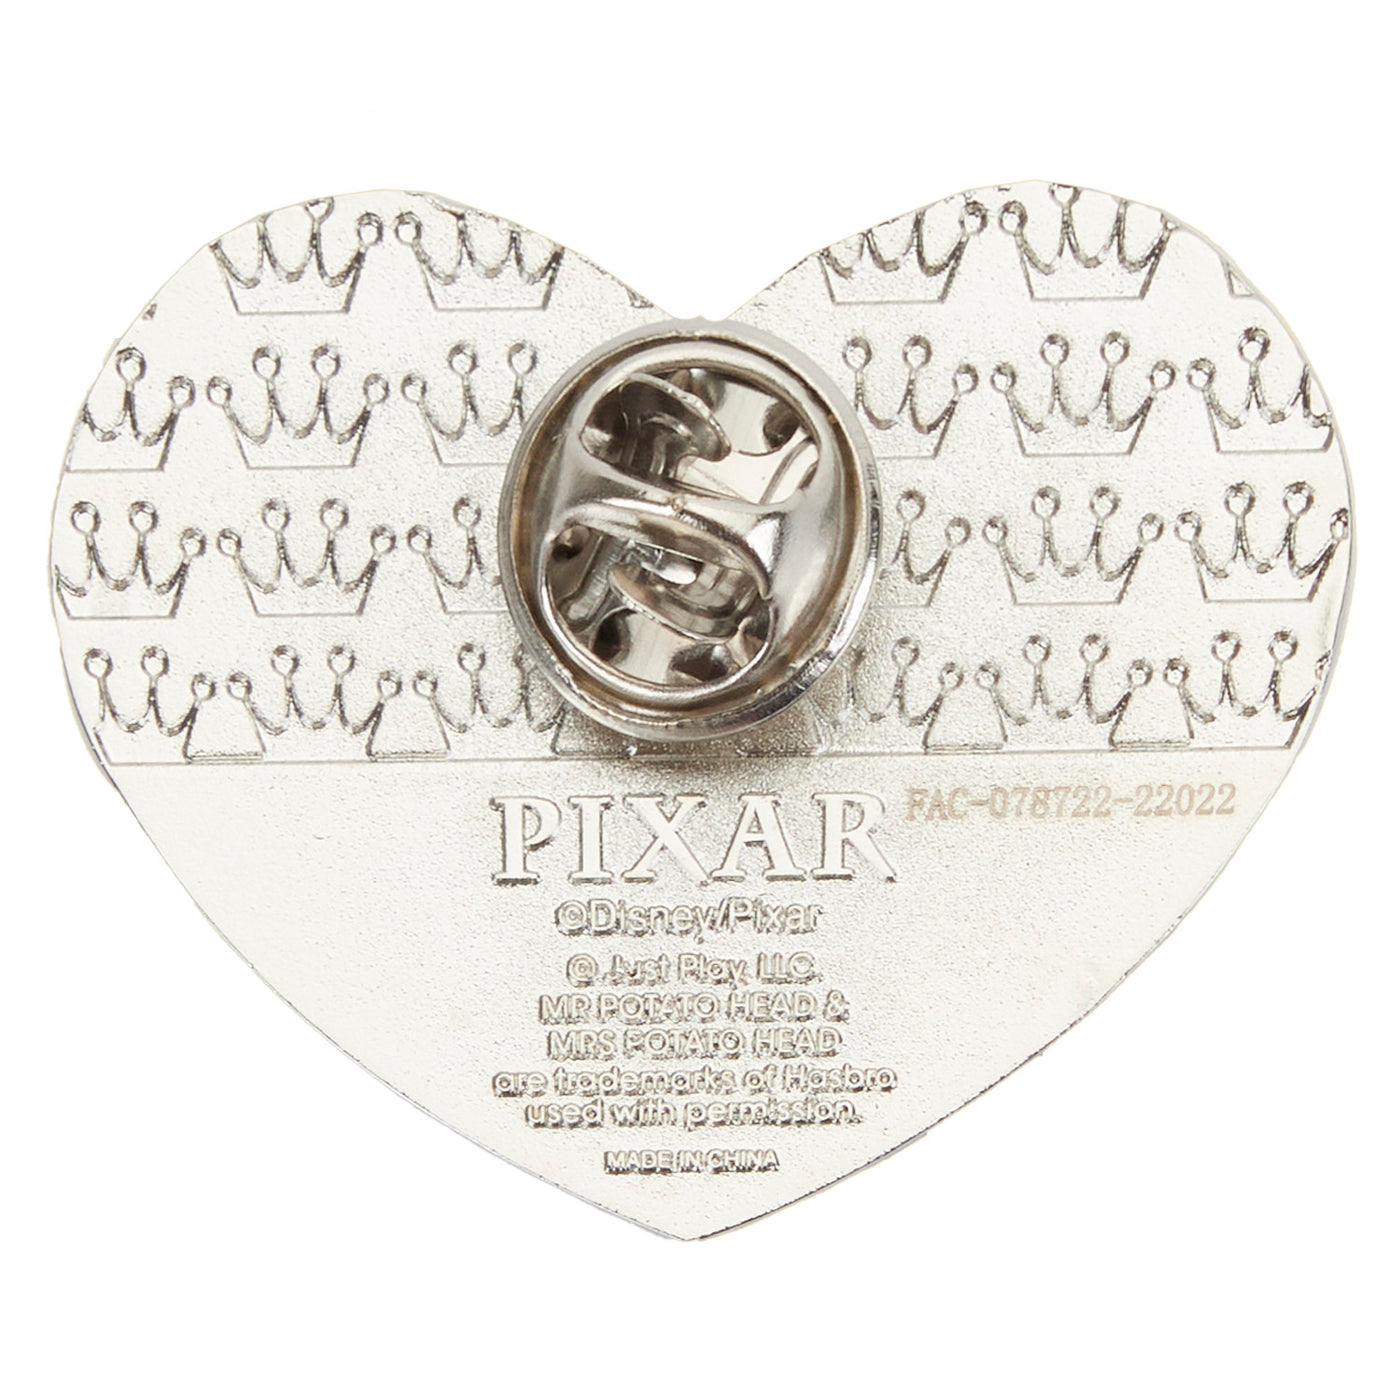 Loungefly Disney Pixar Toy Story Hearts Blind Box Pin